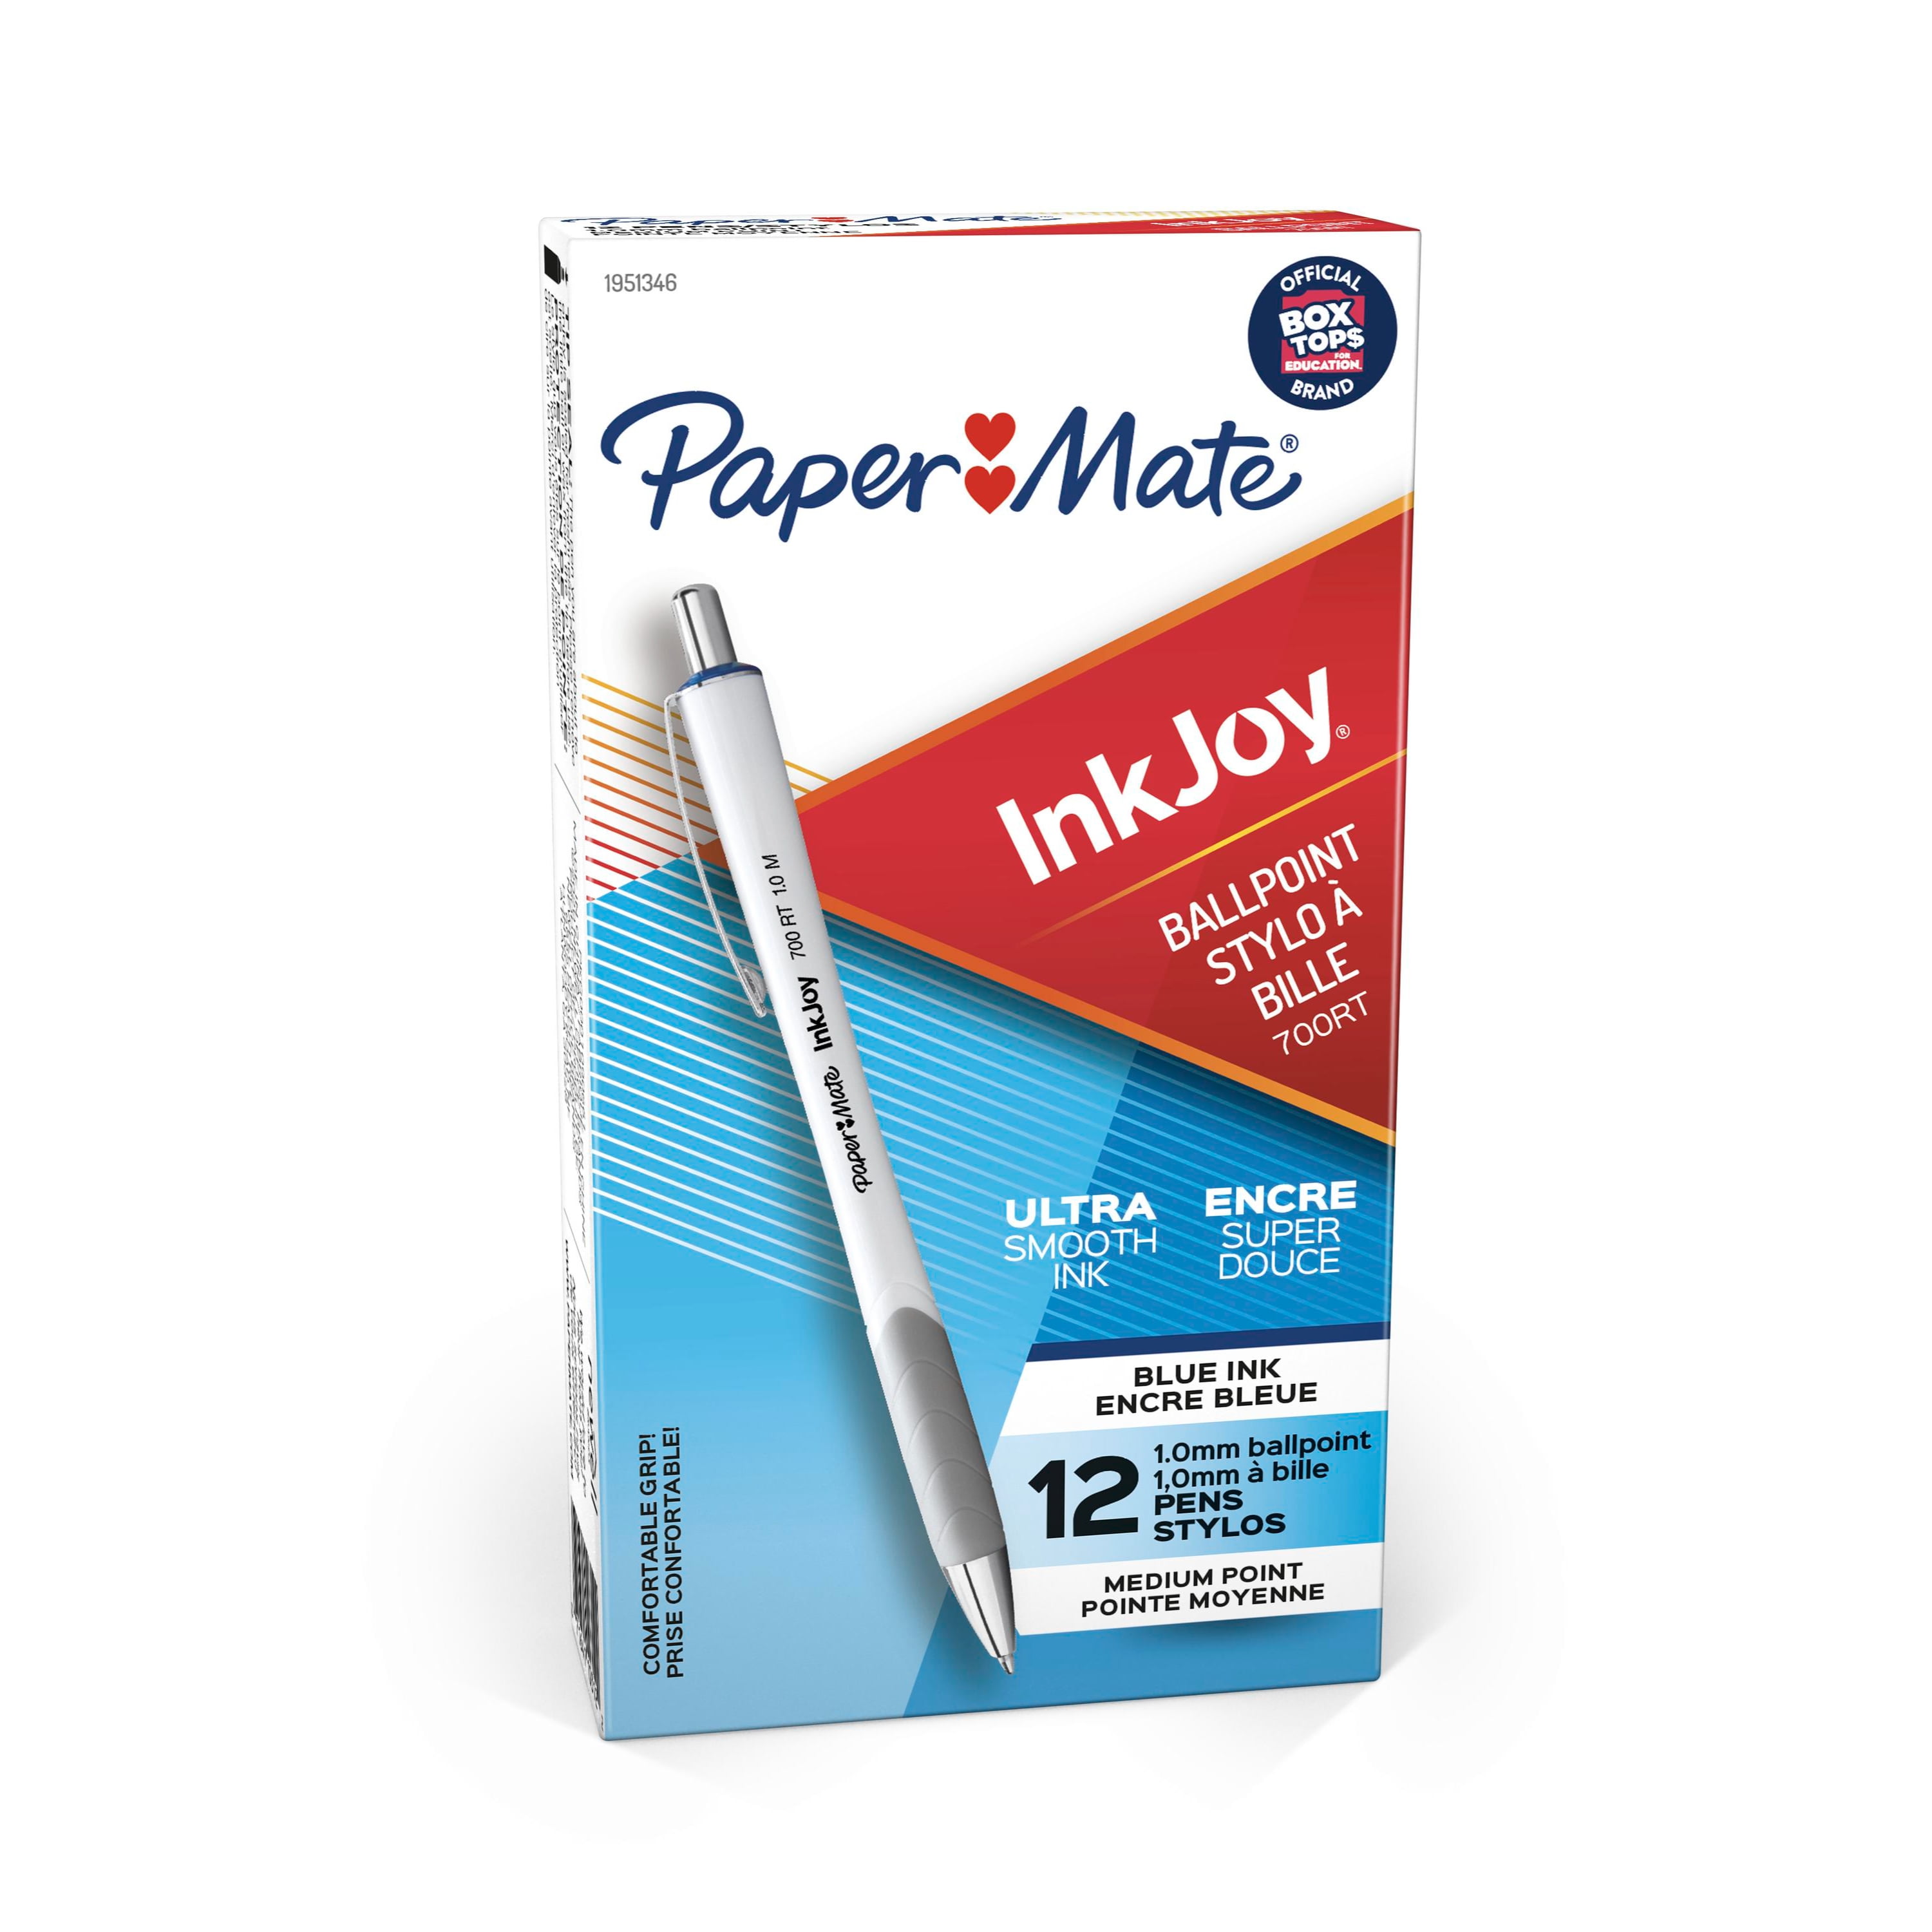 Paper Mate Ink Joy Stylo-Bille Ballpoint Pens NEW 12 Count Box 12 Blue Pens! 